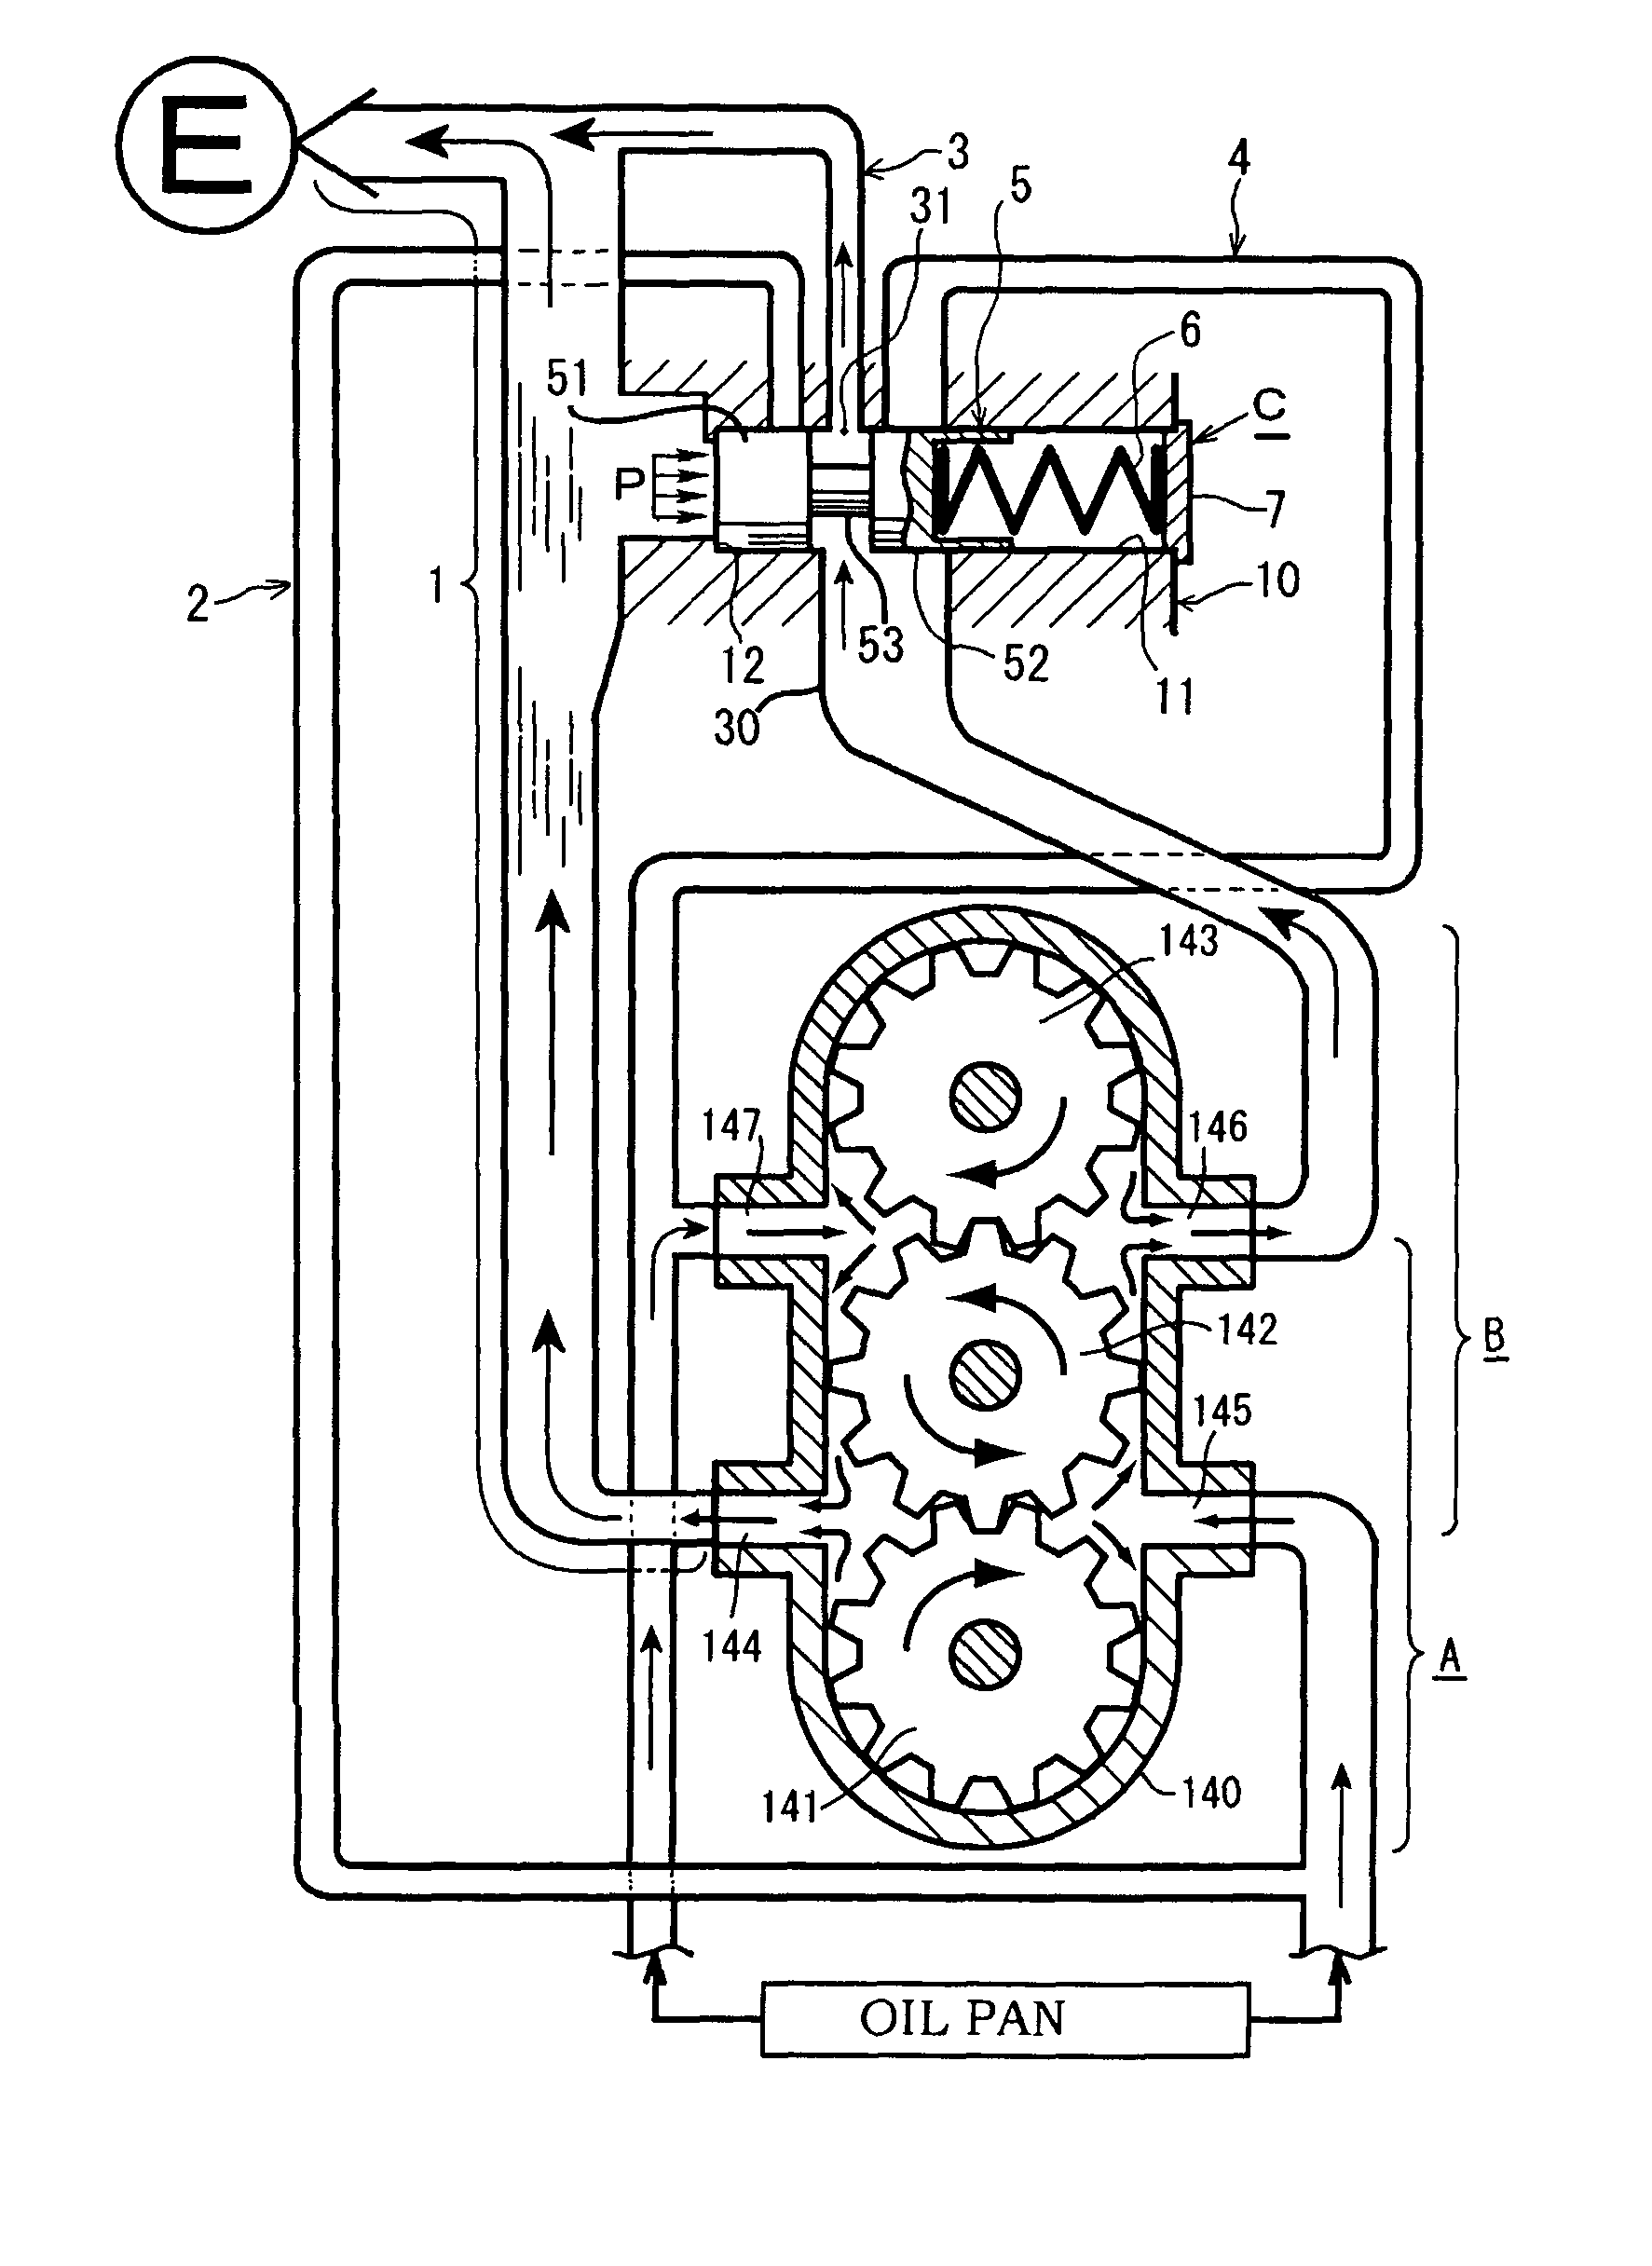 Oil pump pressure control device